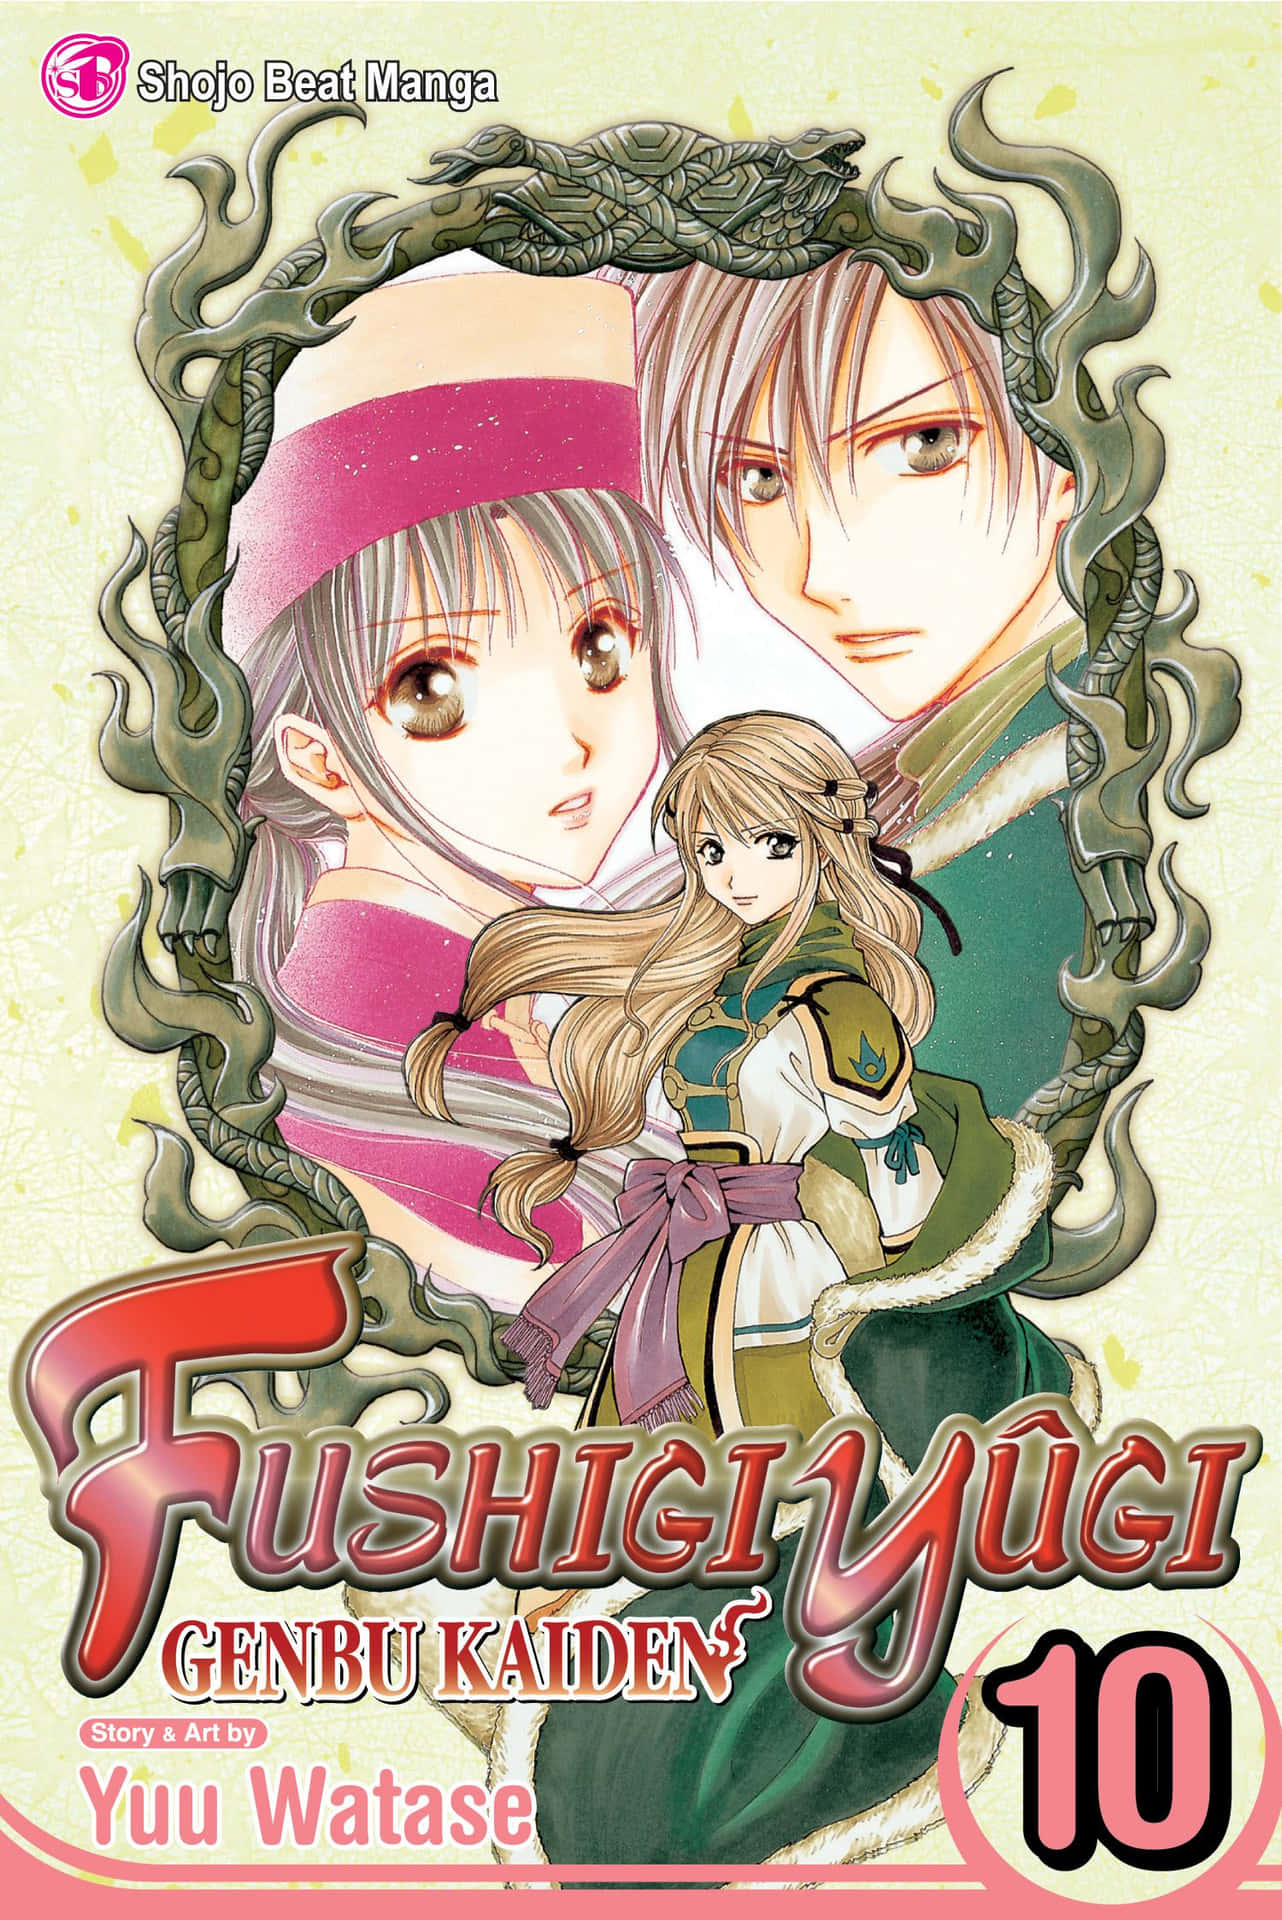 "Join in the magical adventure of Fushigi Yuugi"